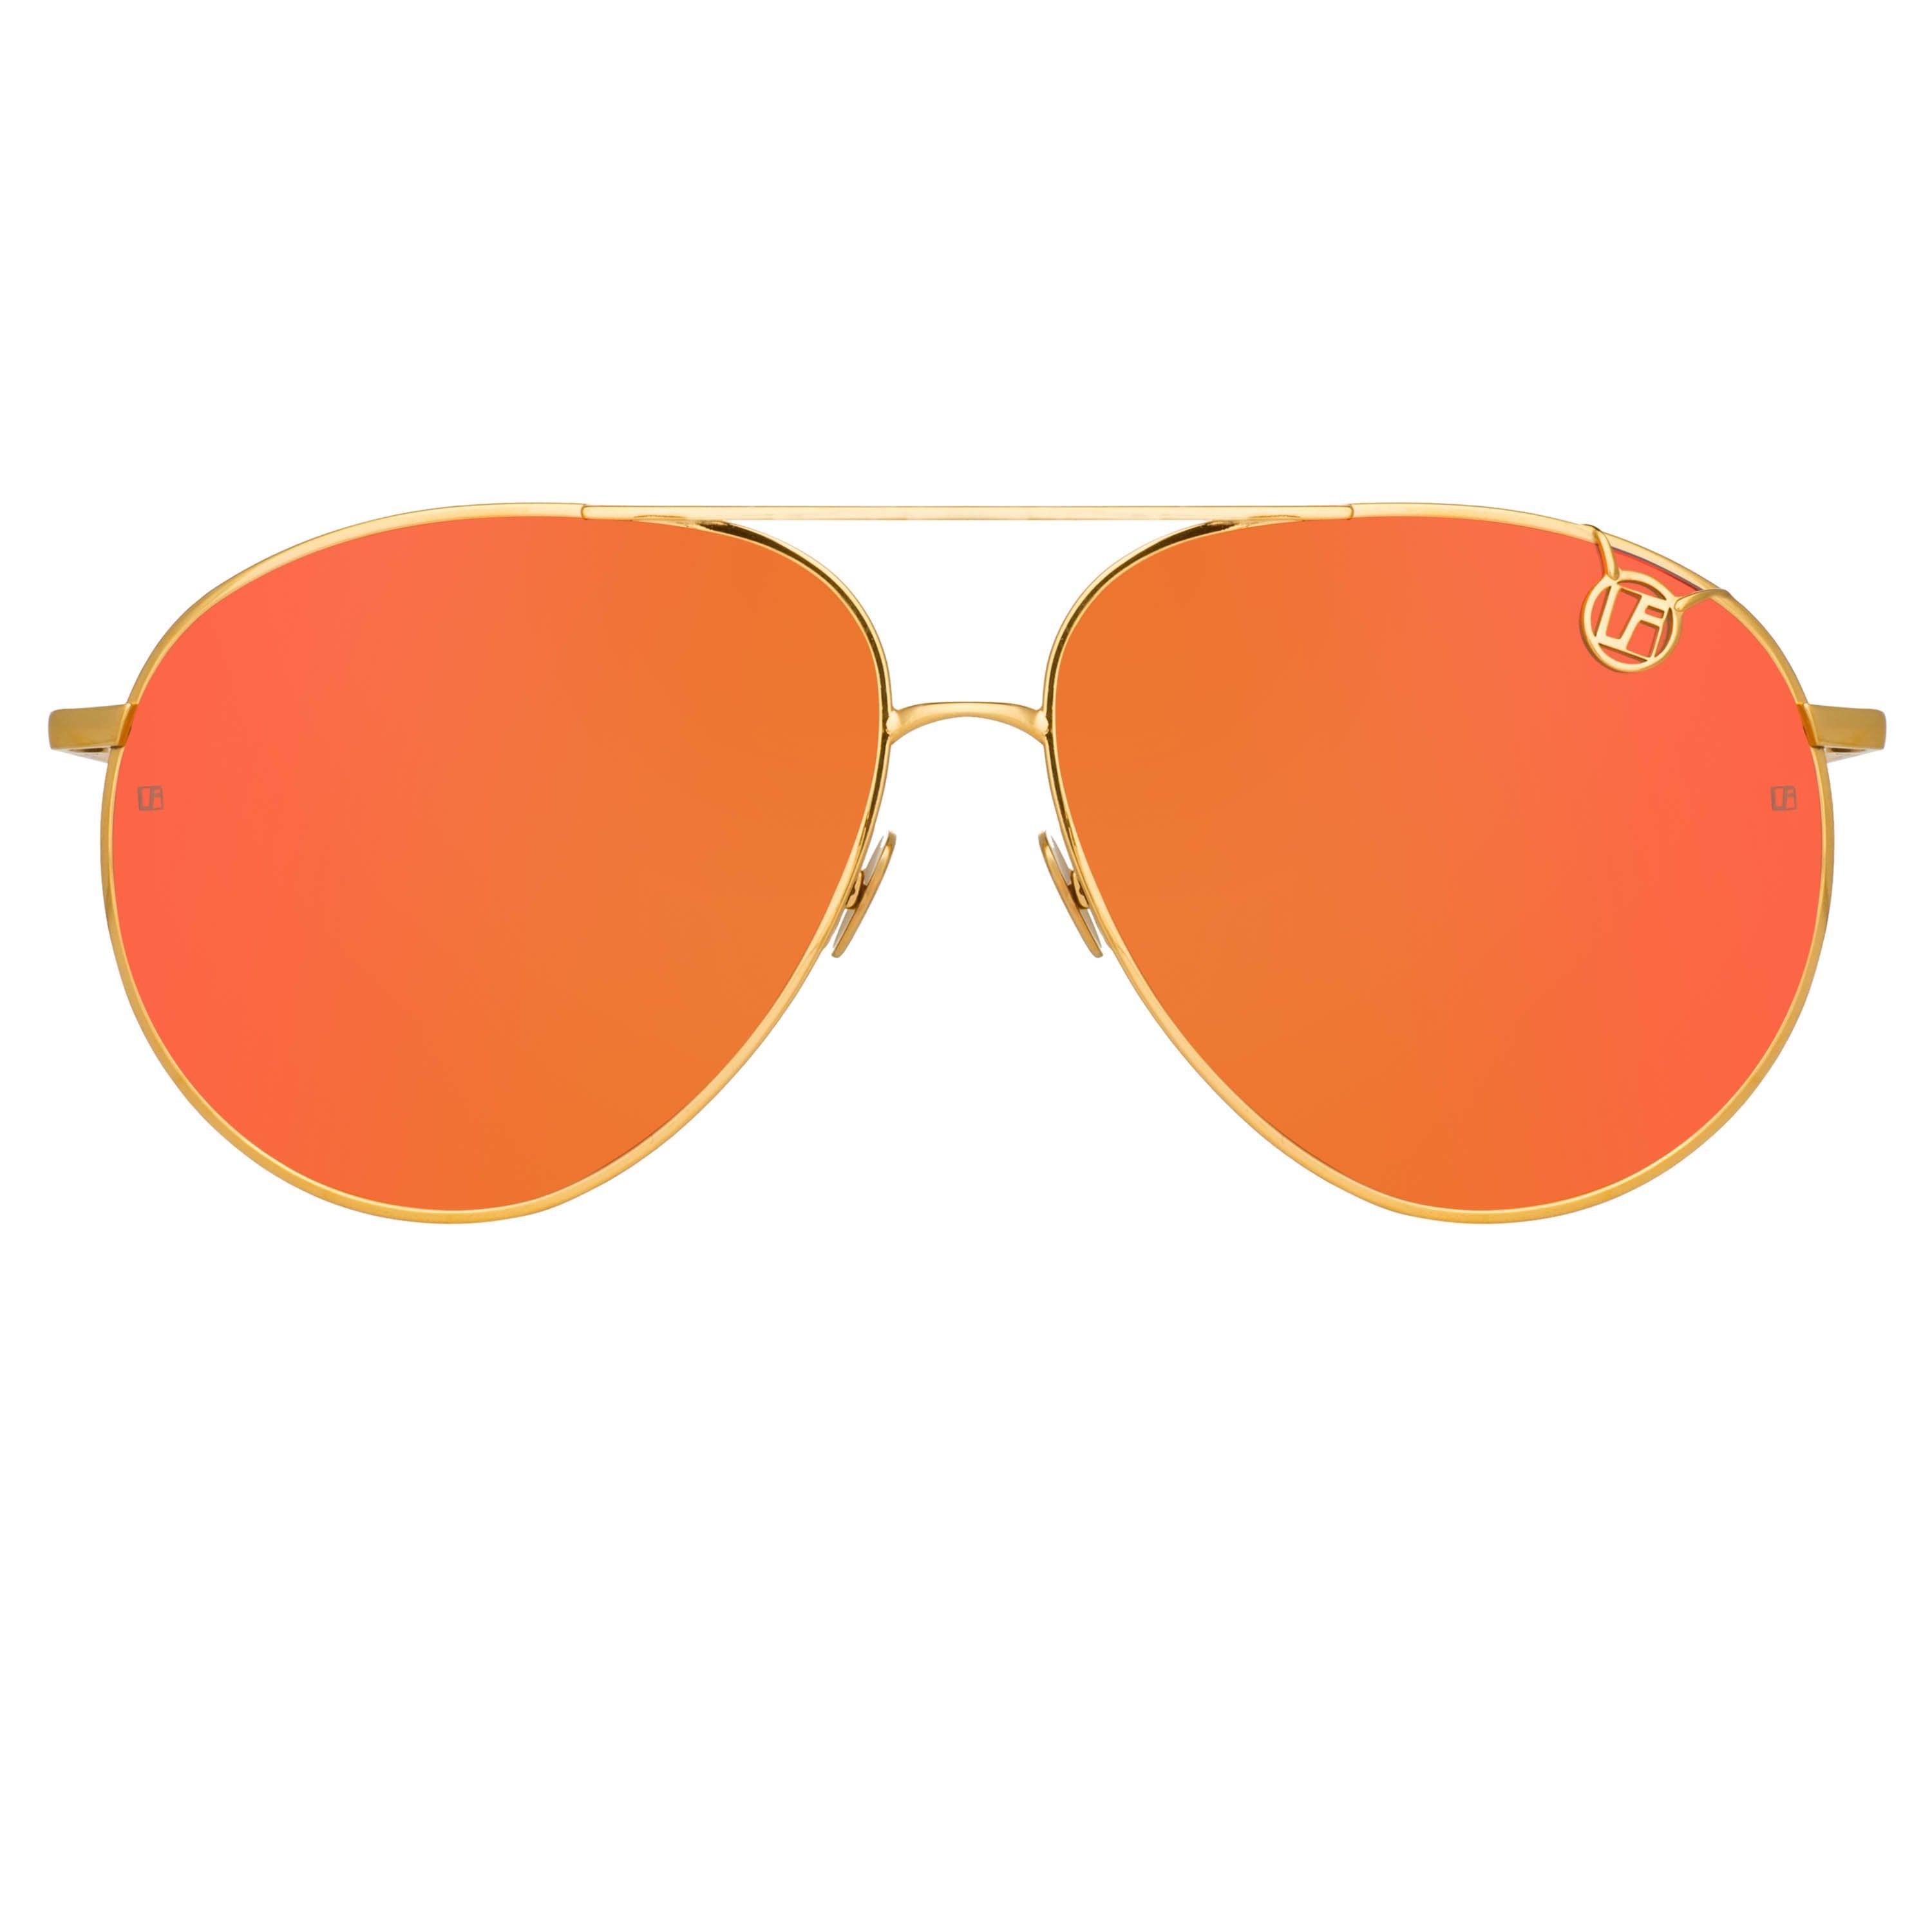 Color_LFL1055C6SUN - Joni Aviator Sunglasses in Light Gold and Red